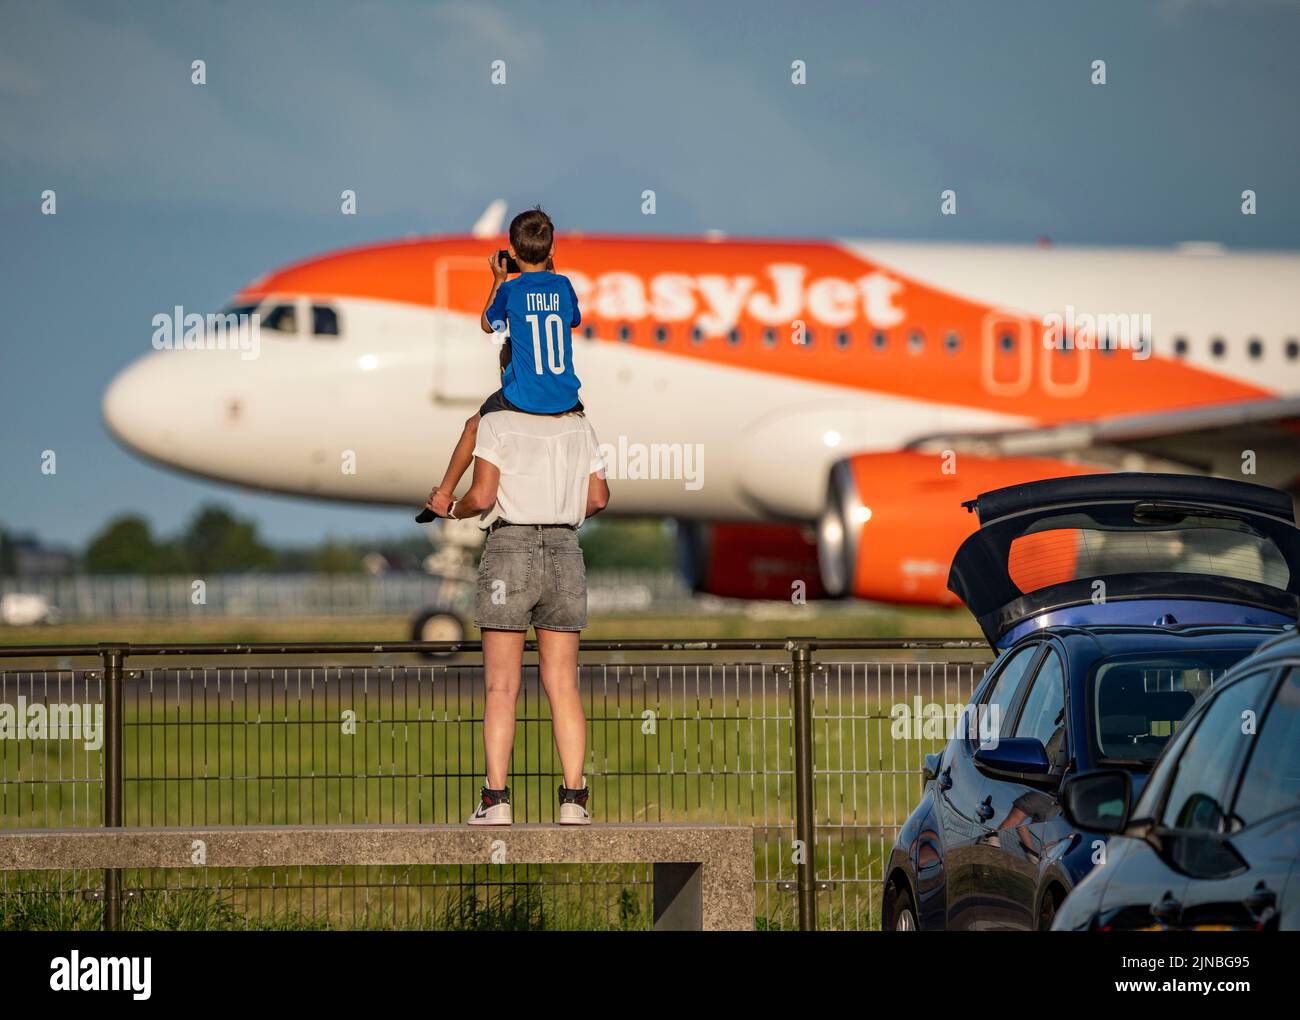 Amsterdam Shiphol Airport, Polderbaan, one of 6 runways, spotter spot, see planes up close, easyjet, Stock Photo